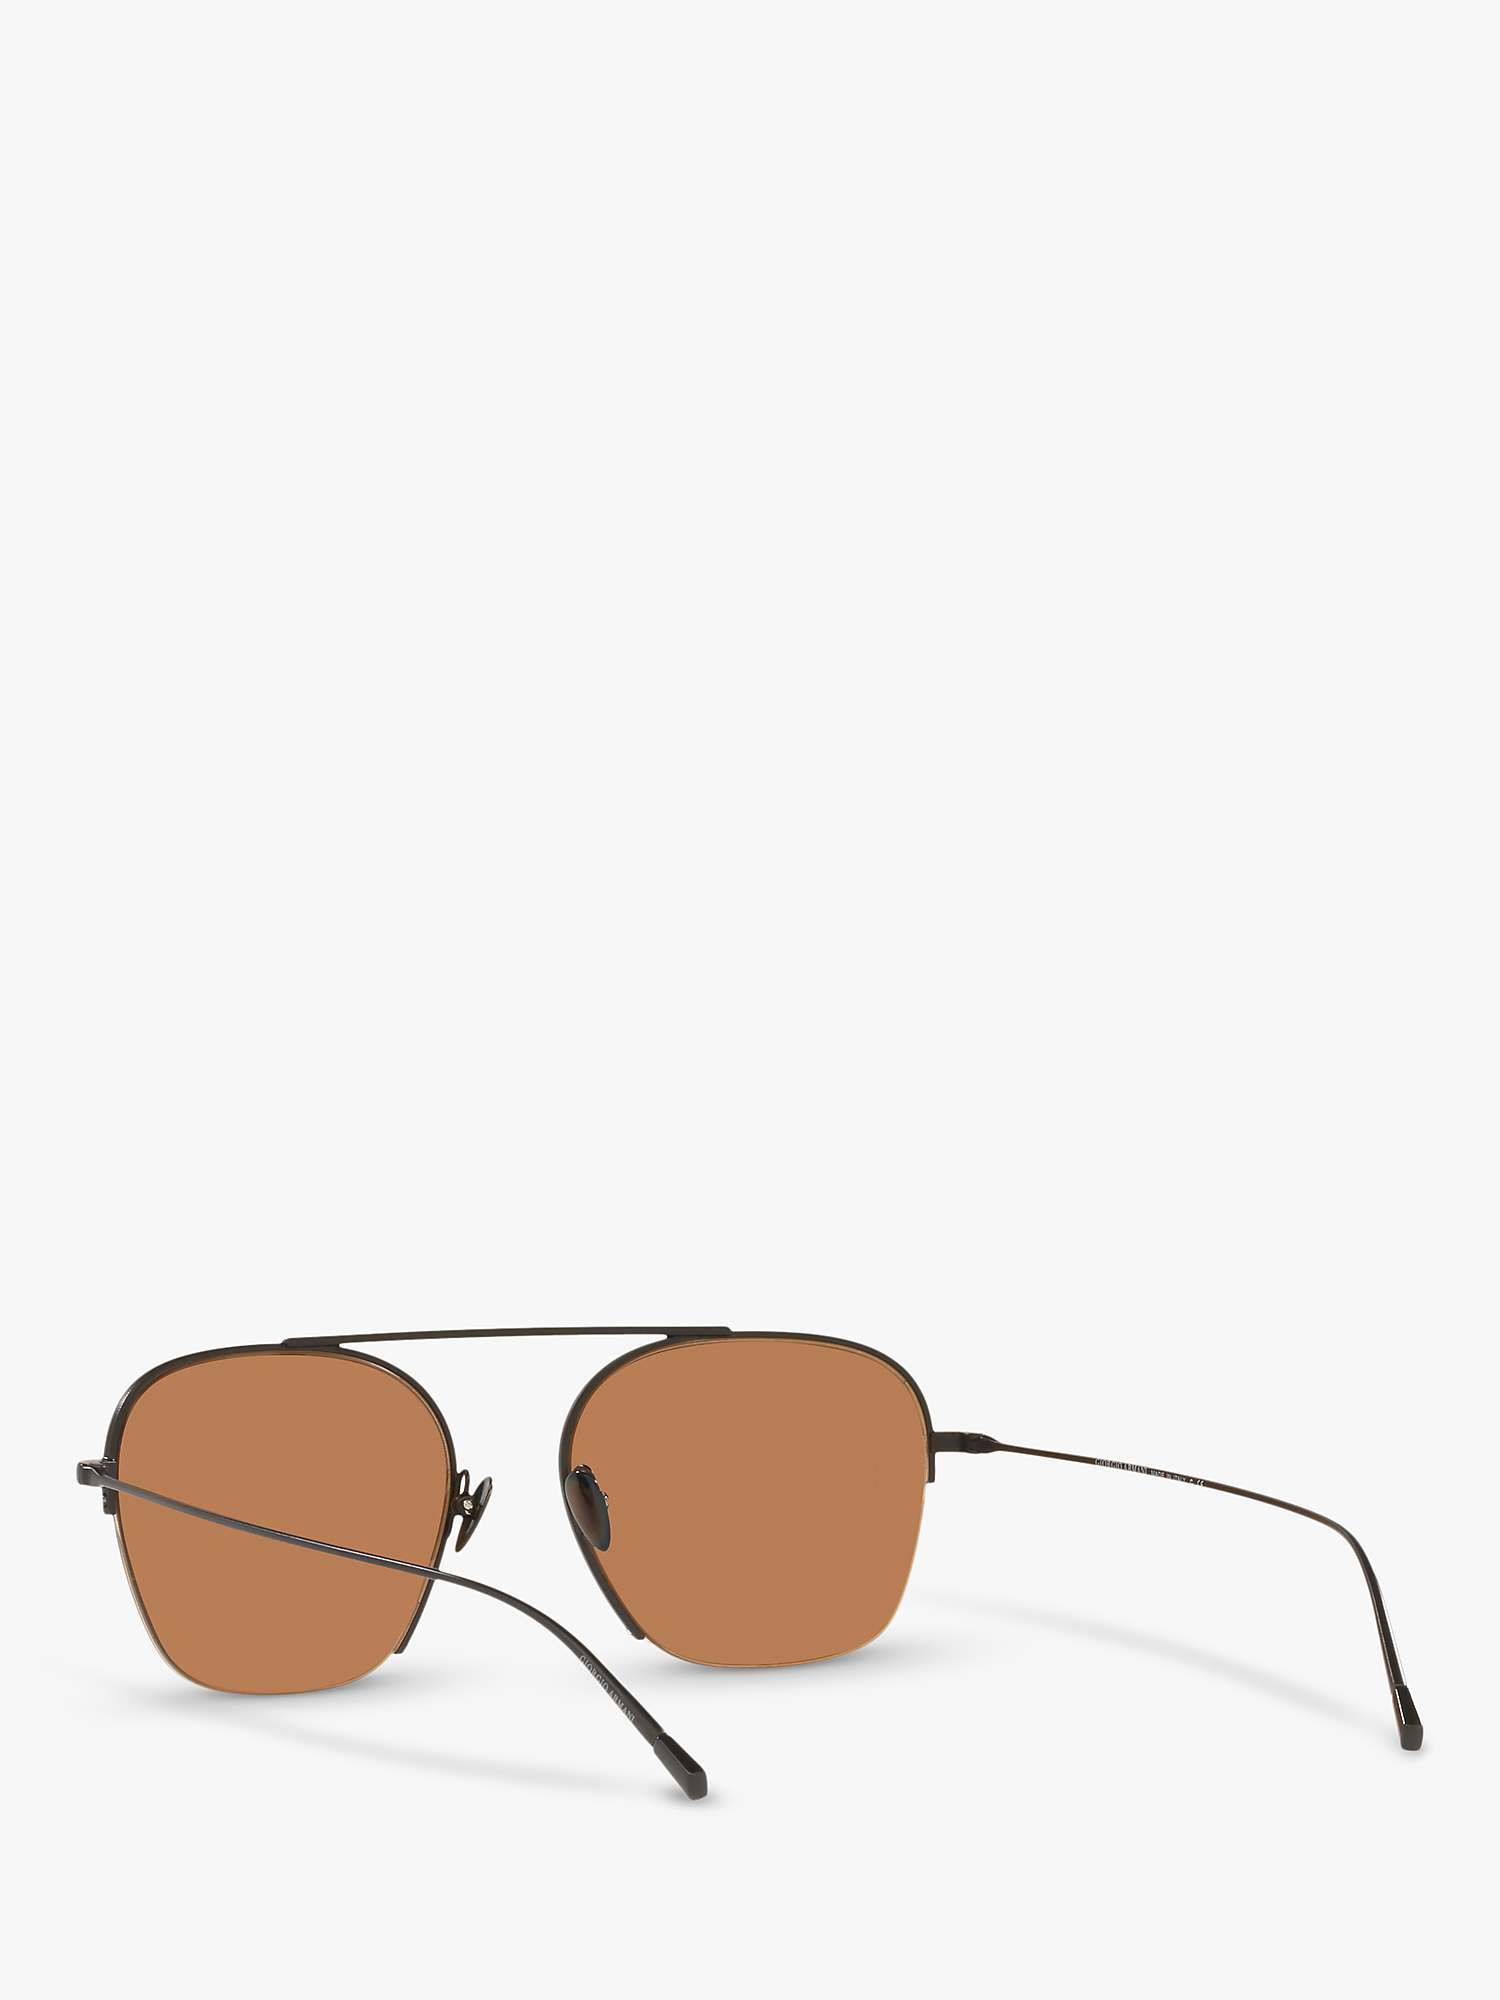 Buy Emporio Armani AR612430 Men's Square Sunglasses, Matte Black/Brown Online at johnlewis.com